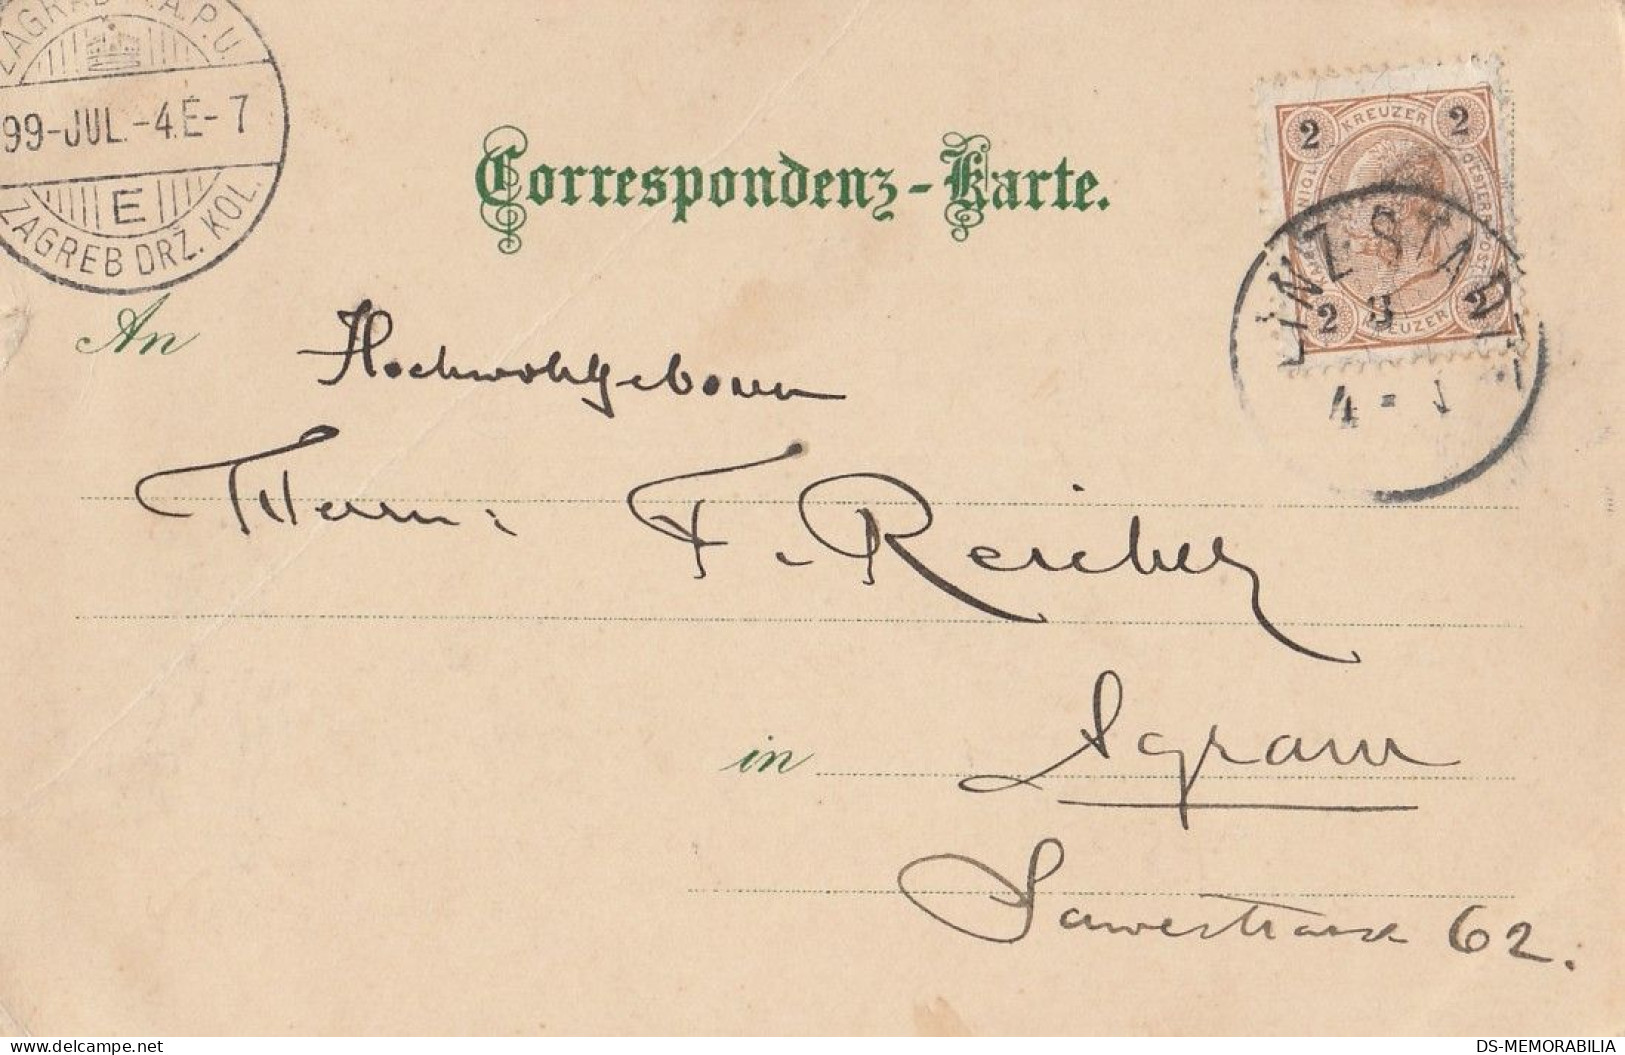 Postlingberg Farblitho 1899 - Linz Pöstlingberg